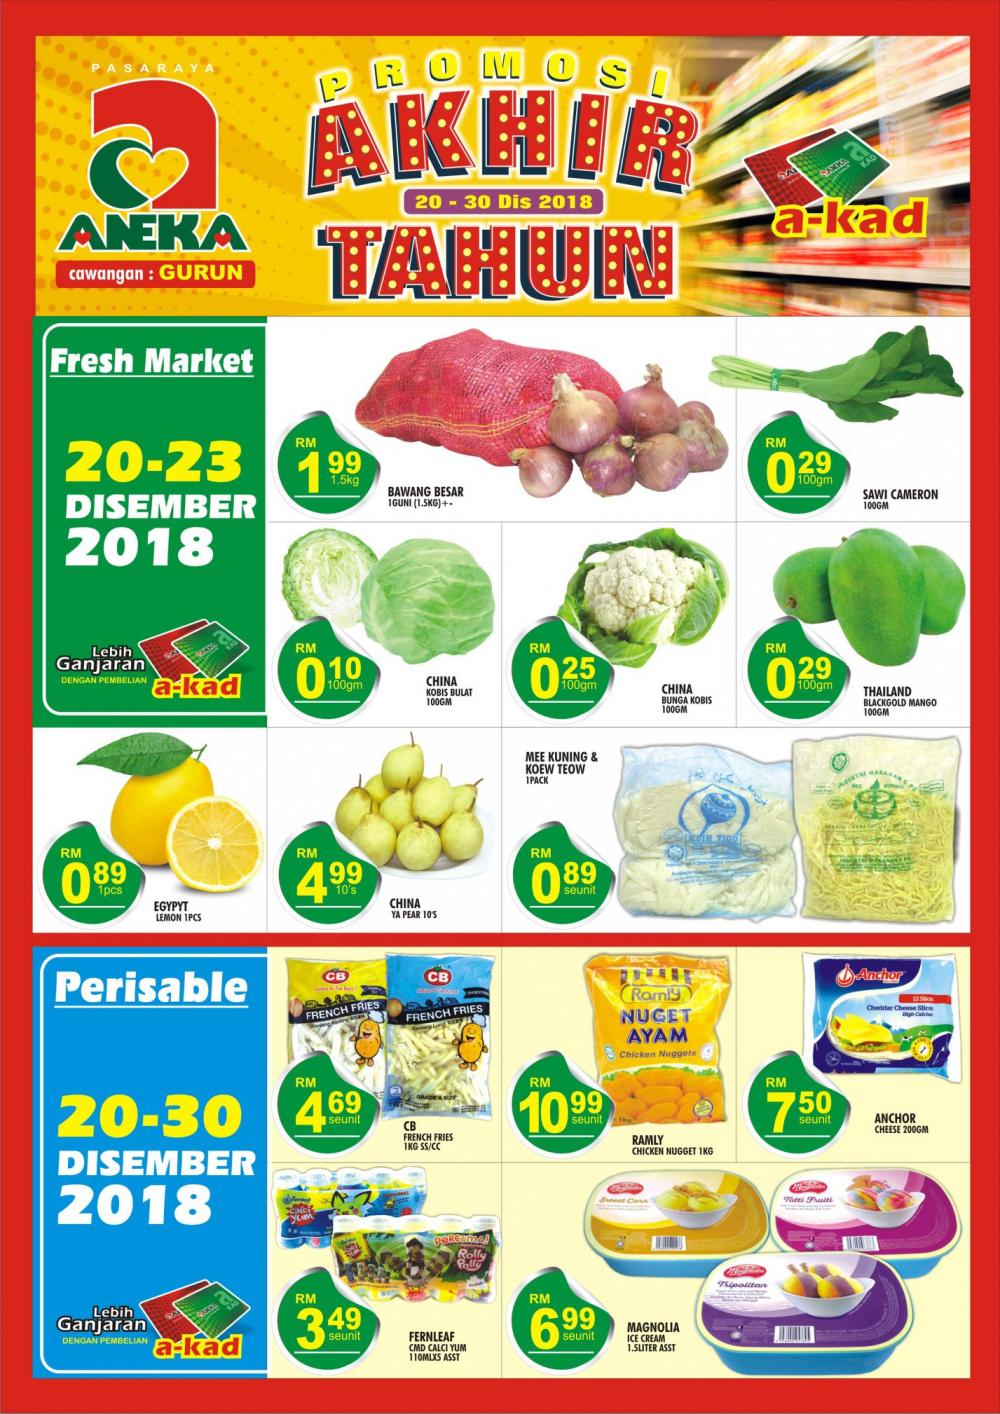 Pasaraya Aneka Gurun Year End Sale & Back to School Promotion (20 December 2018 - 30 December 2018)